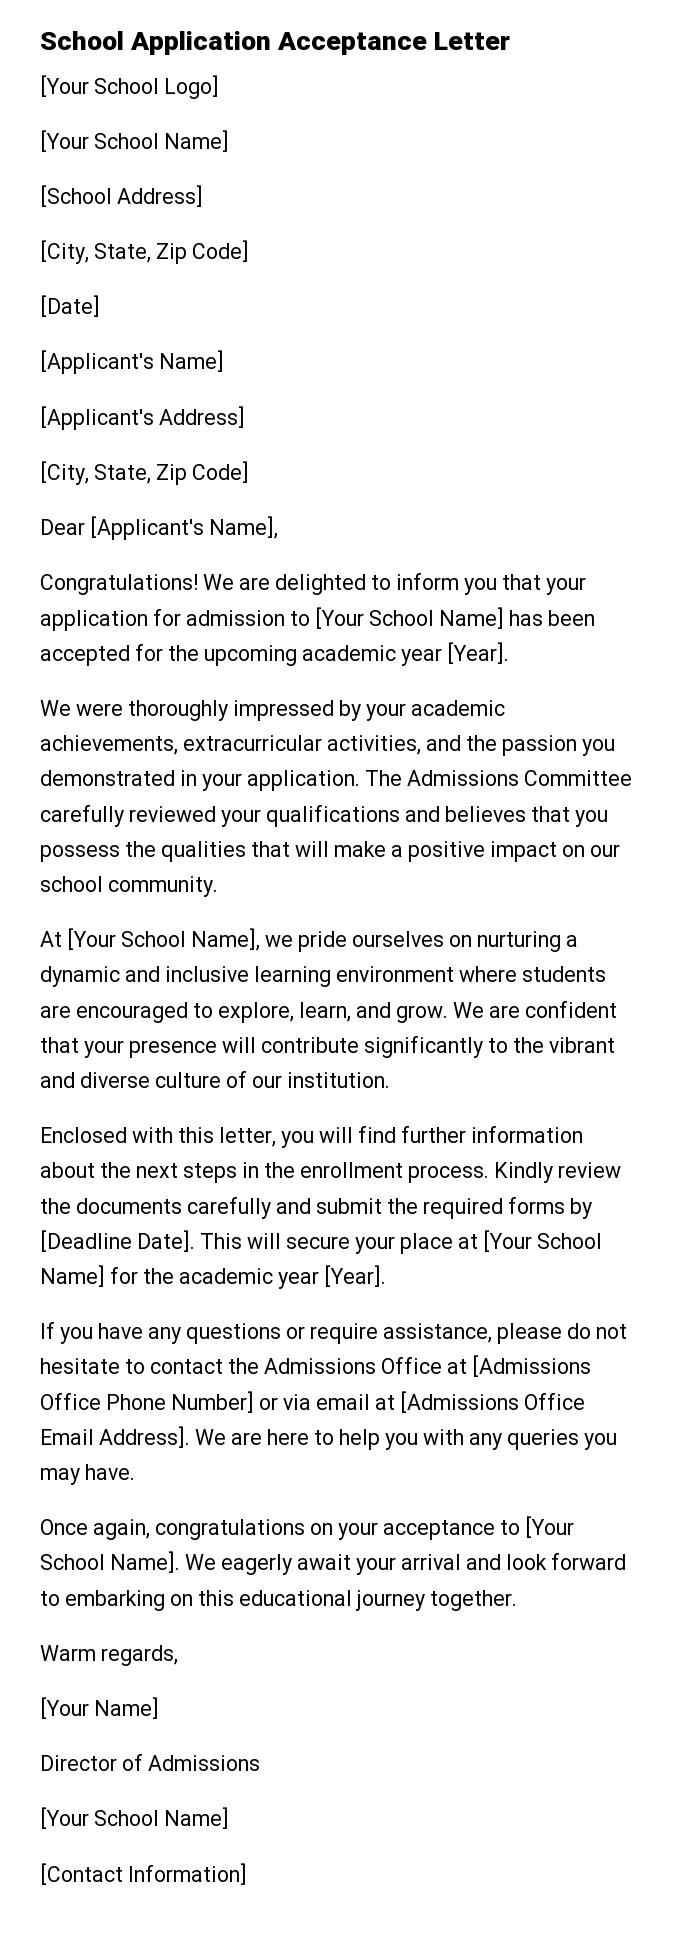 School Application Acceptance Letter